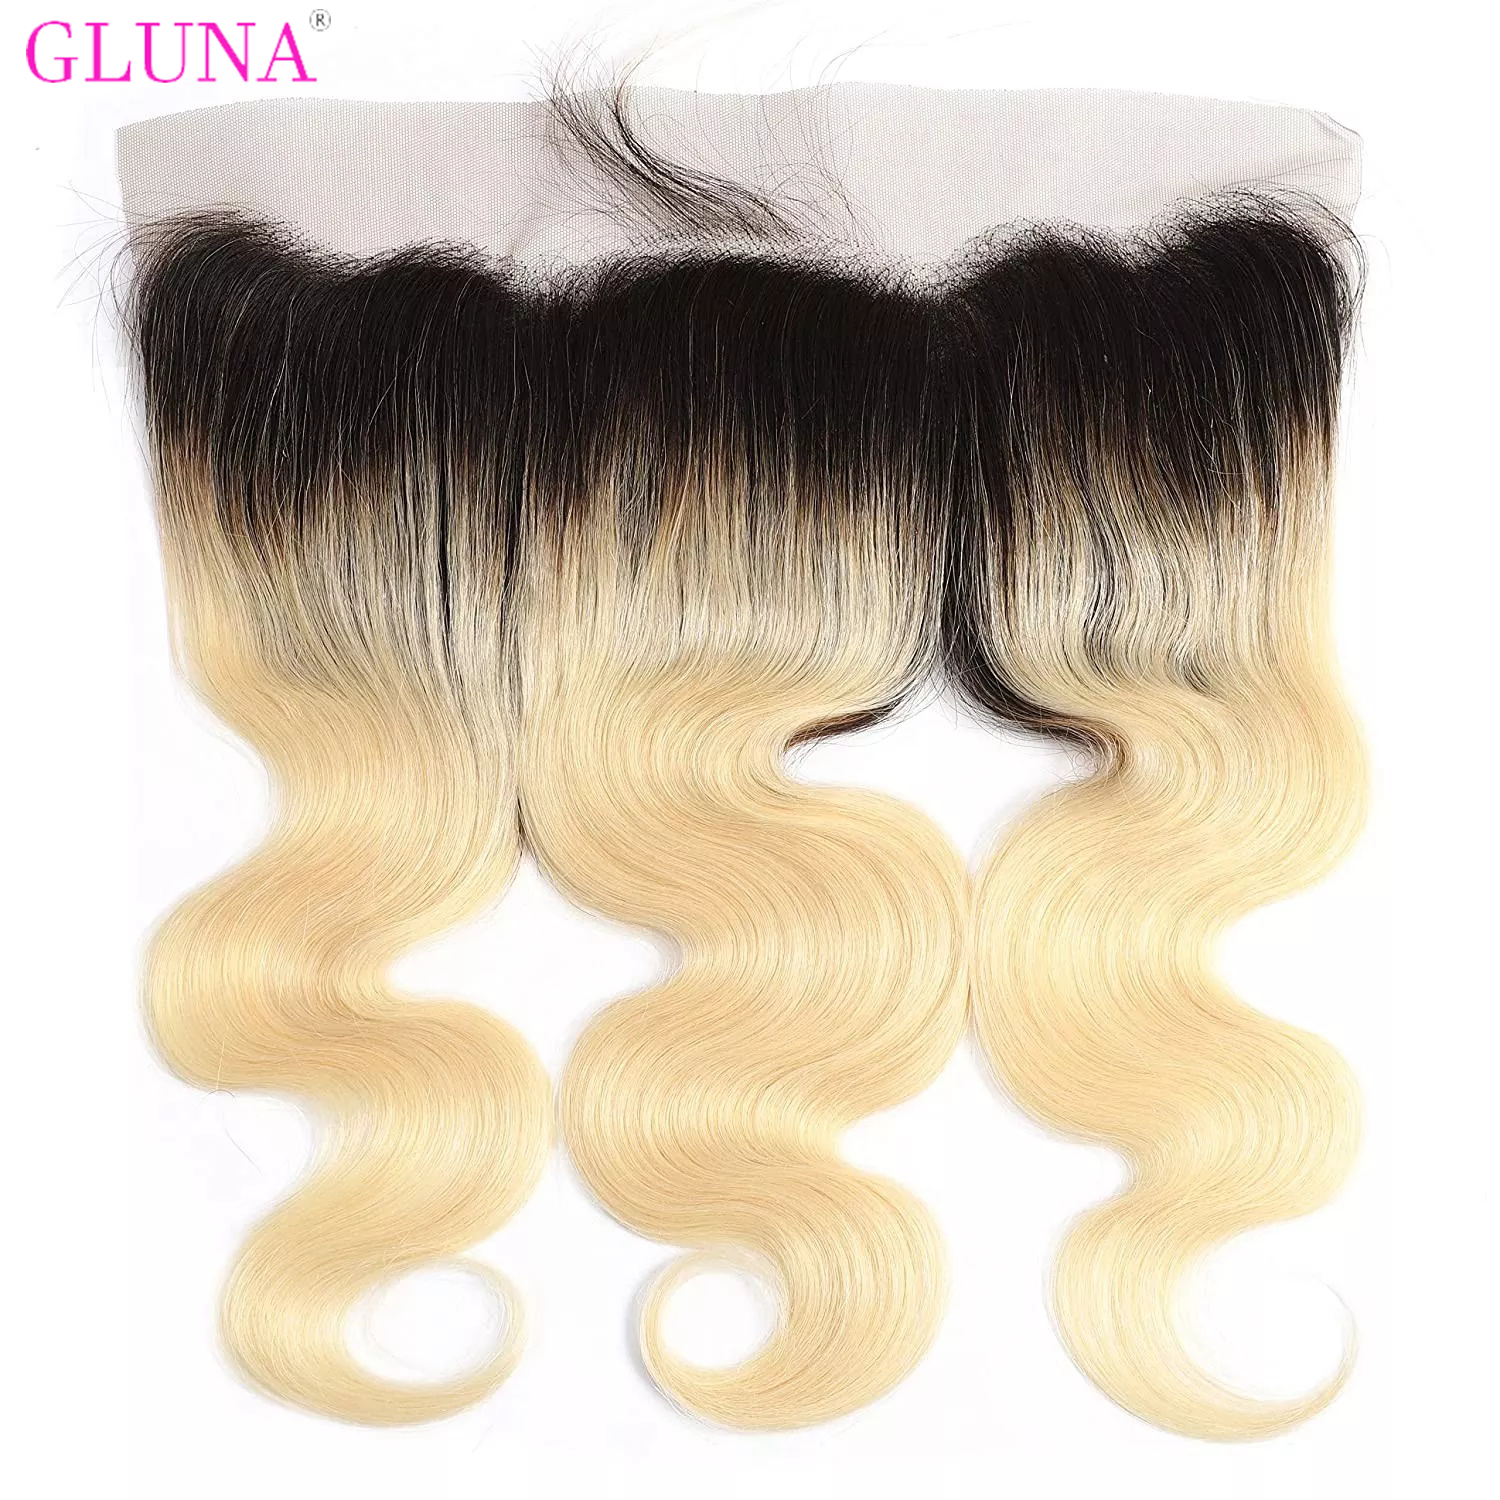 Gluna Hair 13×4 Lace Frontal Body Wave Hair 1B/613 Blonde Russian Virgin Hair (1B/613 color )